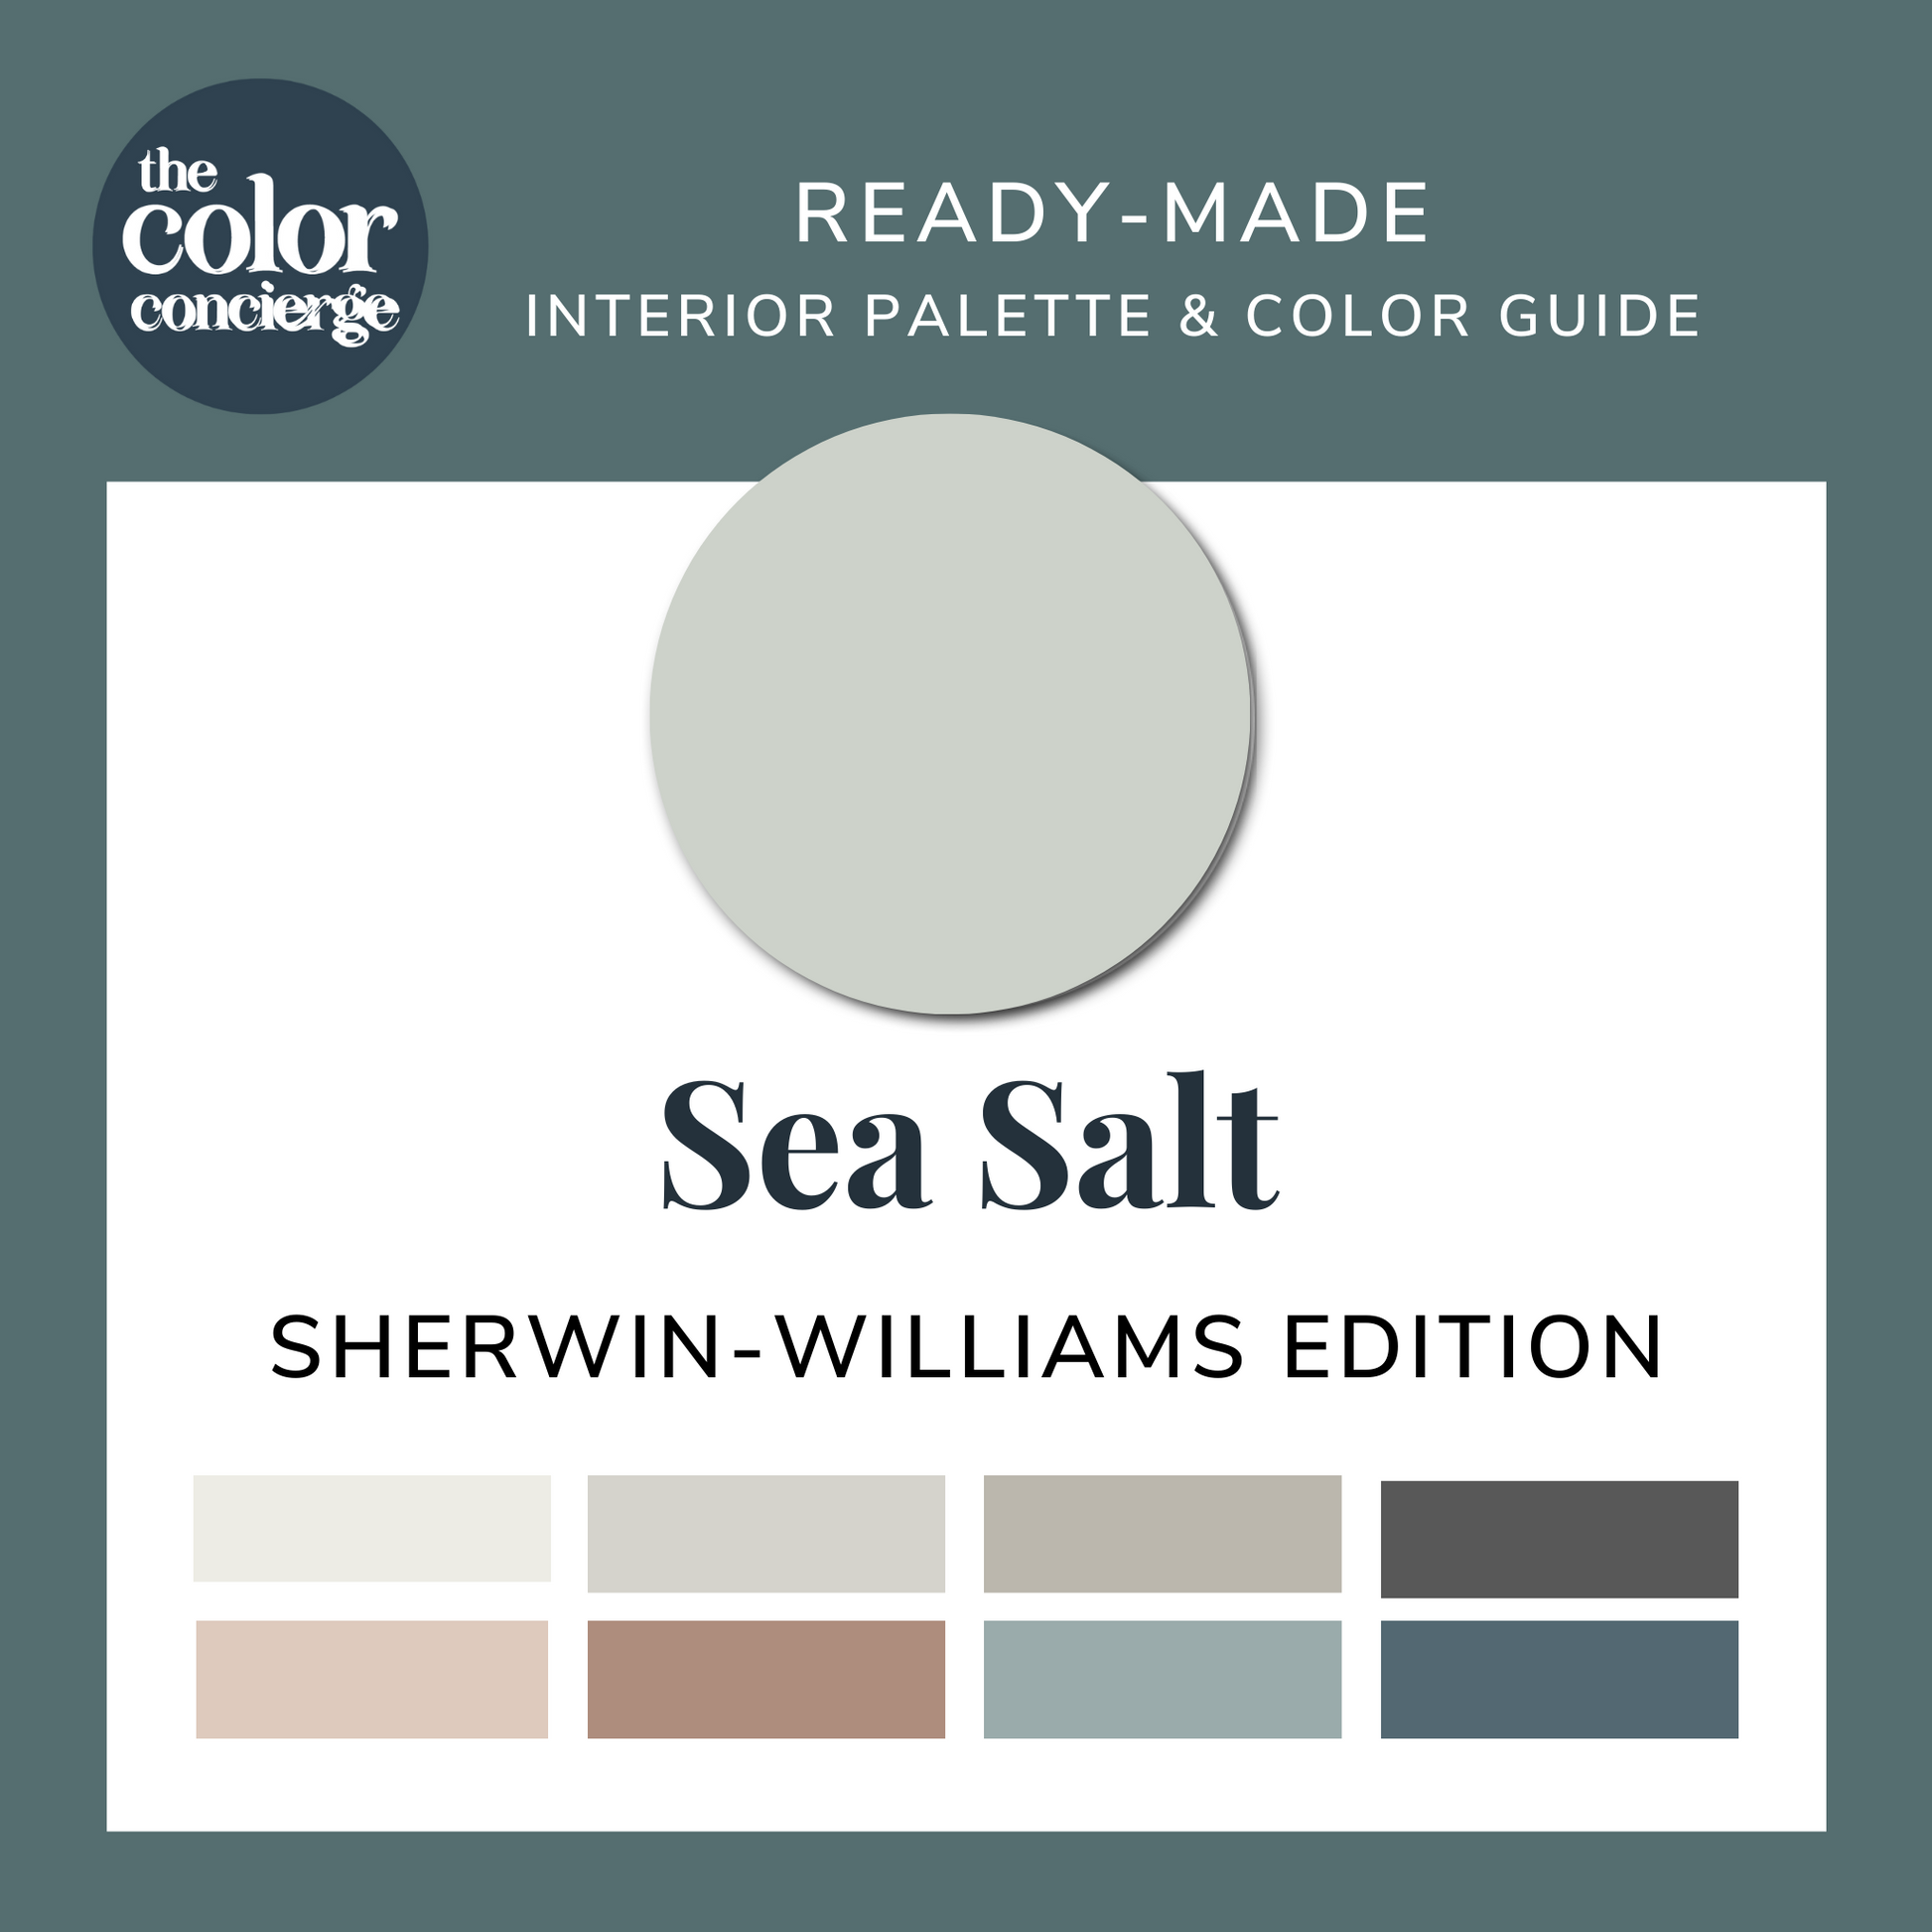 Sherwin-Williams Sea Salt color palette guide